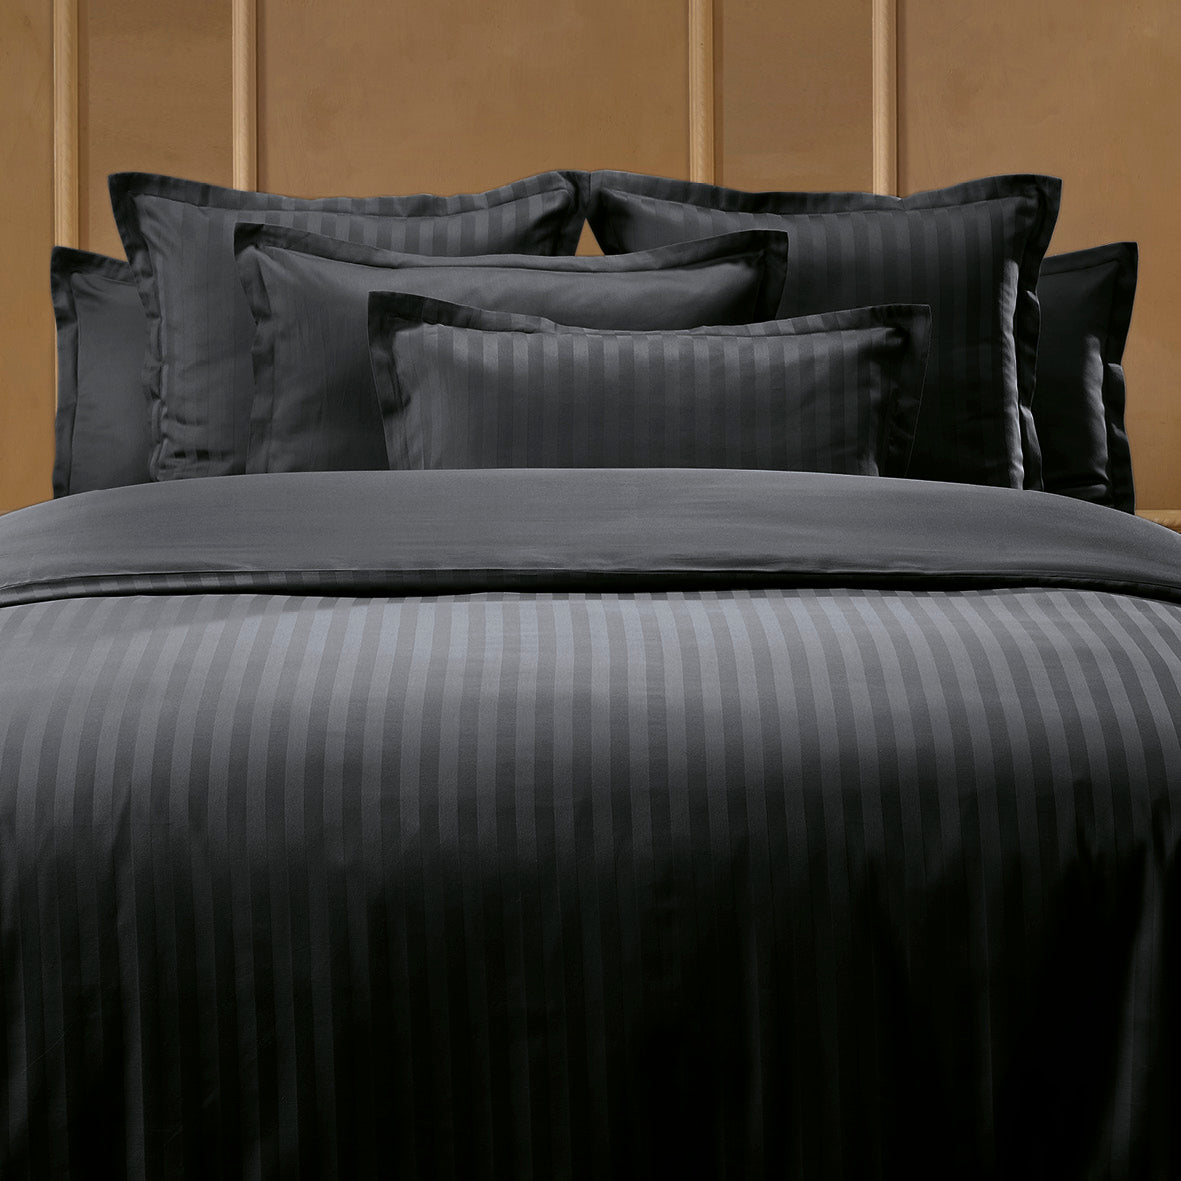 Pillowcase(s) cotton satin - Jacquard woven - dobby stripe black